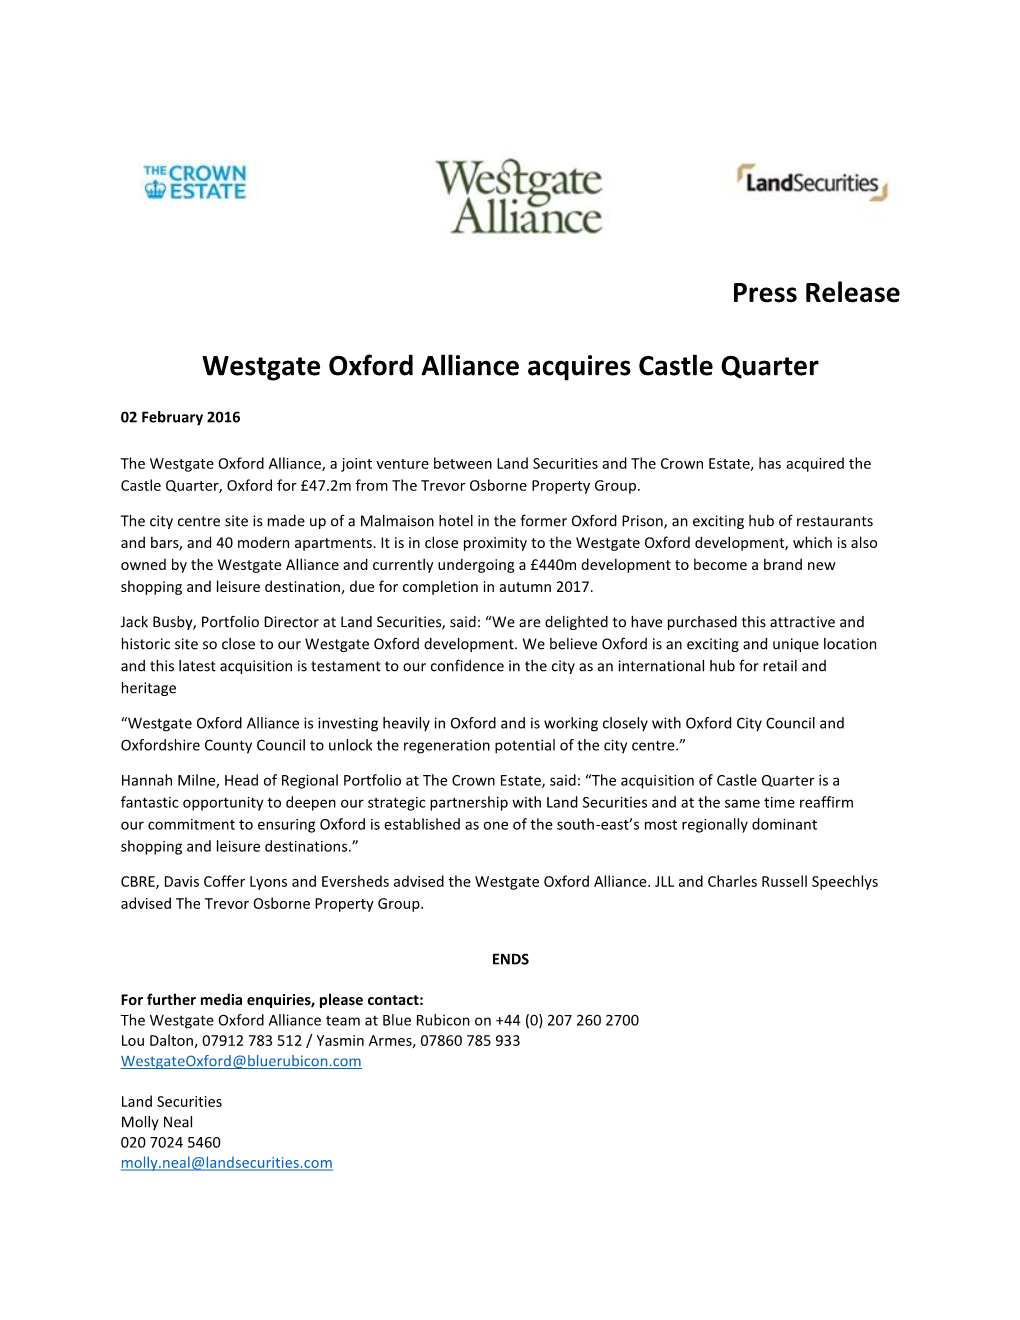 Press Release Westgate Oxford Alliance Acquires Castle Quarter